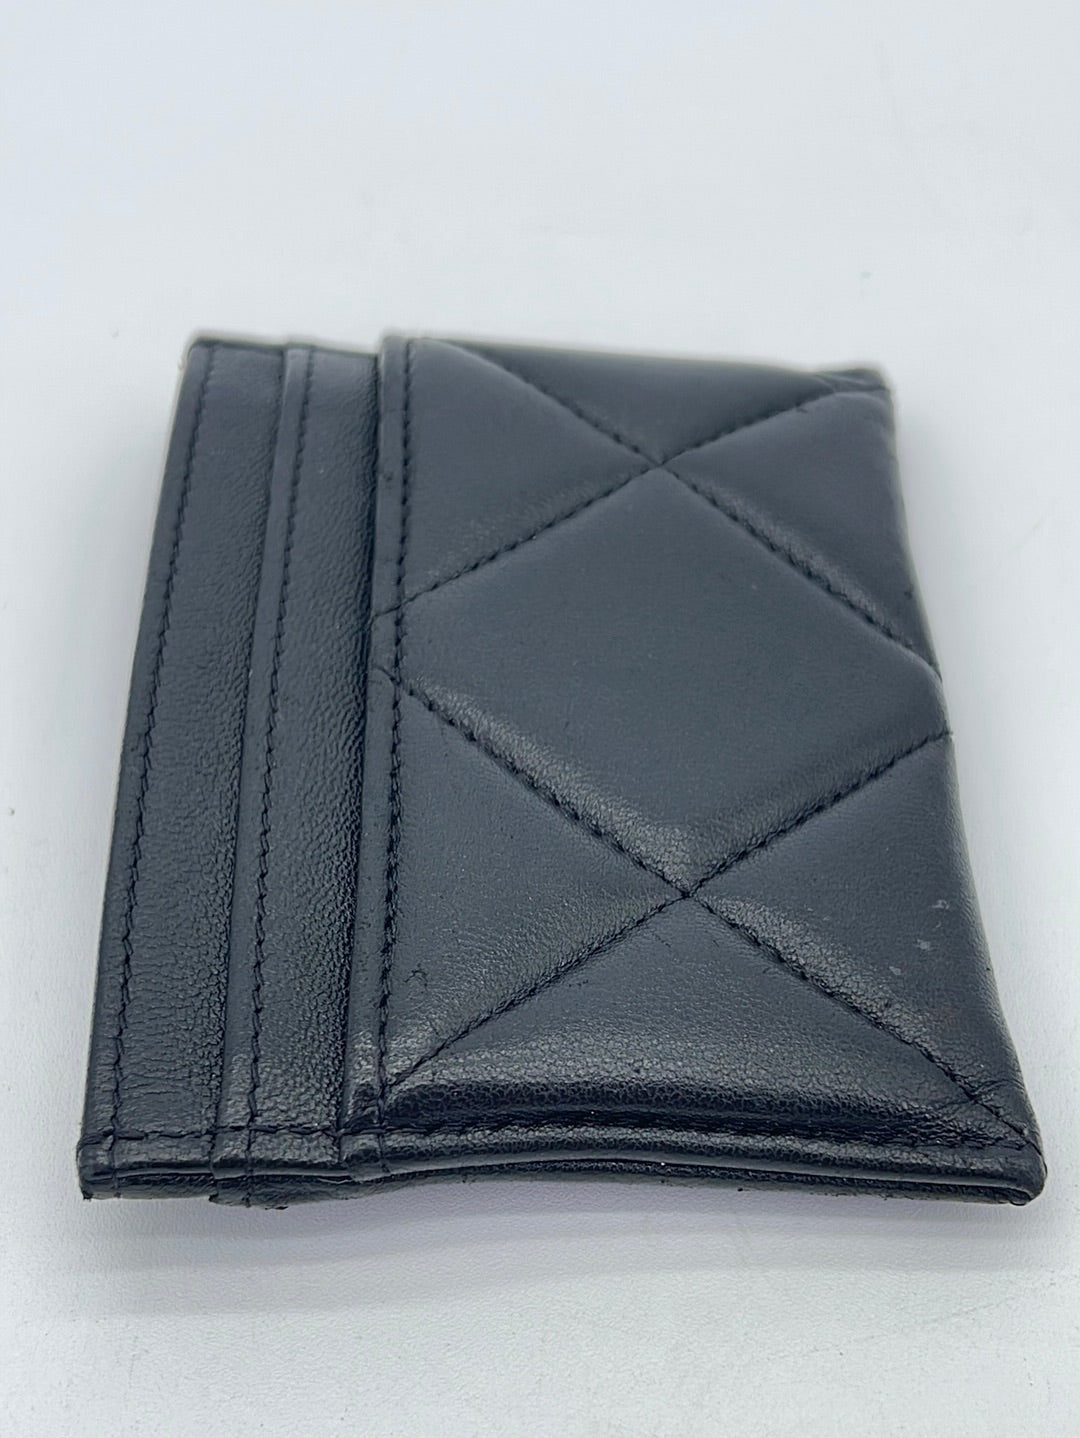 PRELOVED Chanel 19 Black Quilted Leather Card Holder 31625212 061623